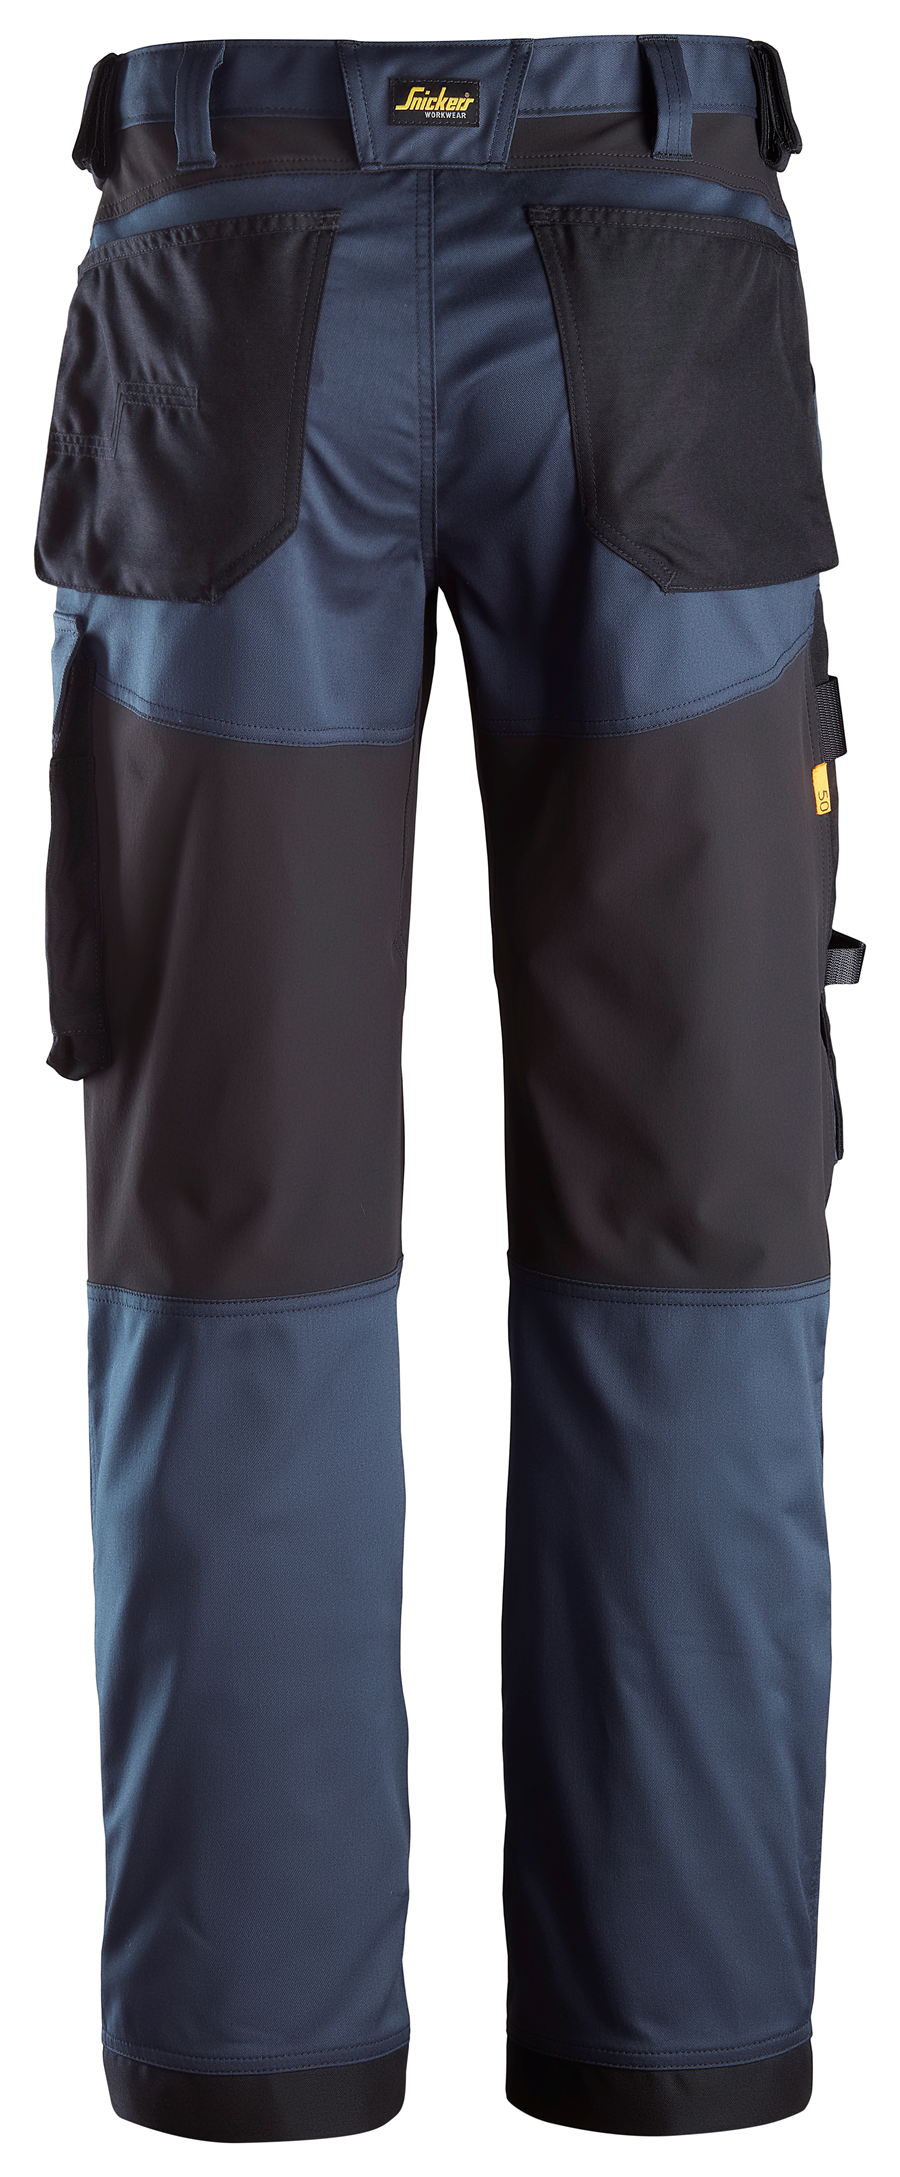 Snickers Workwear U6351 AllroundWork Stretch Loose Fit Work Pants - Navy/Black